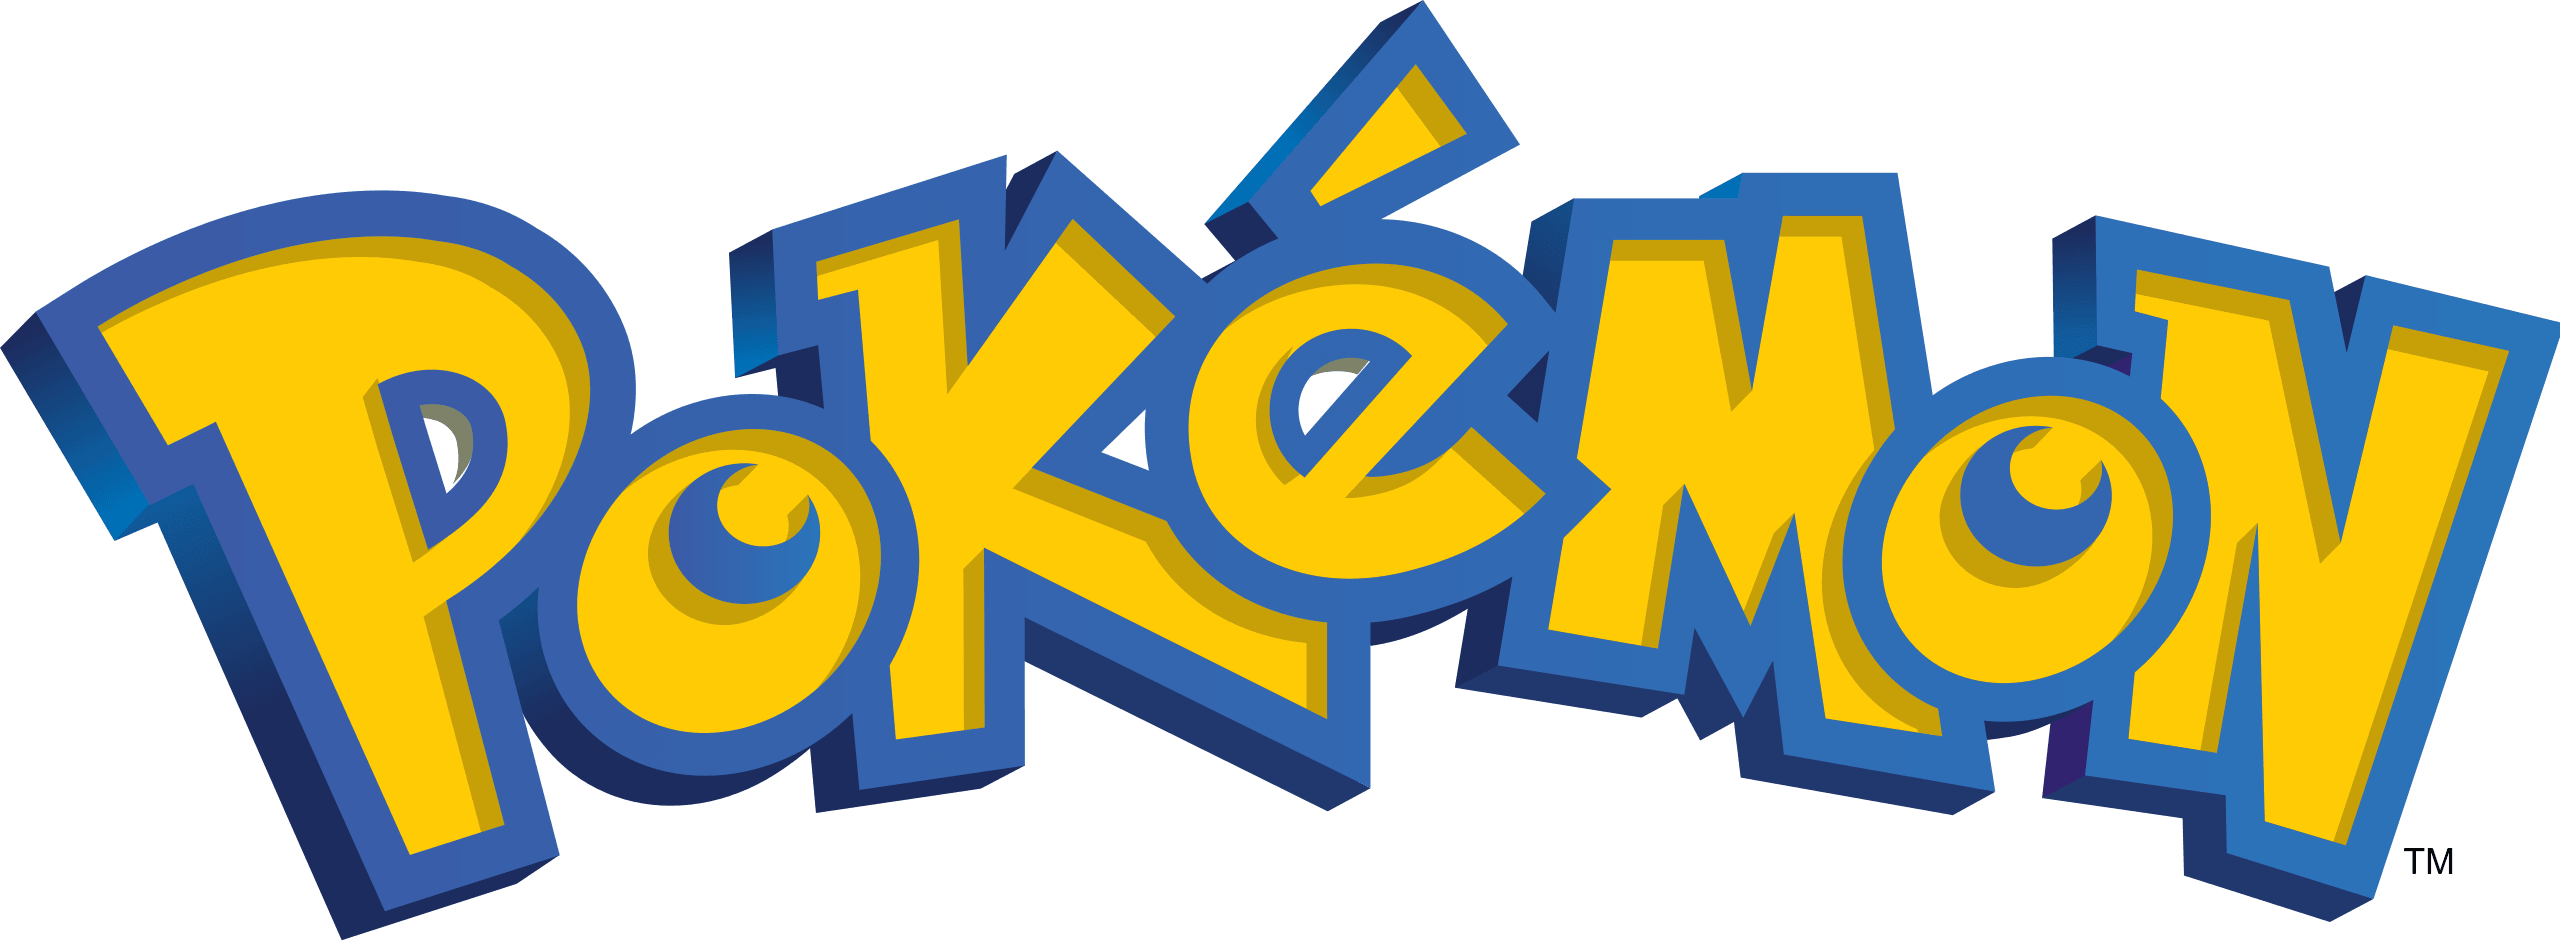 Pokemon First Partner Pack (2 Booster Packs & 3 Jumbo Cards) - Hoenn (Featuring Treecko, Torchic & Mudkip) - Hobby Champion Inc